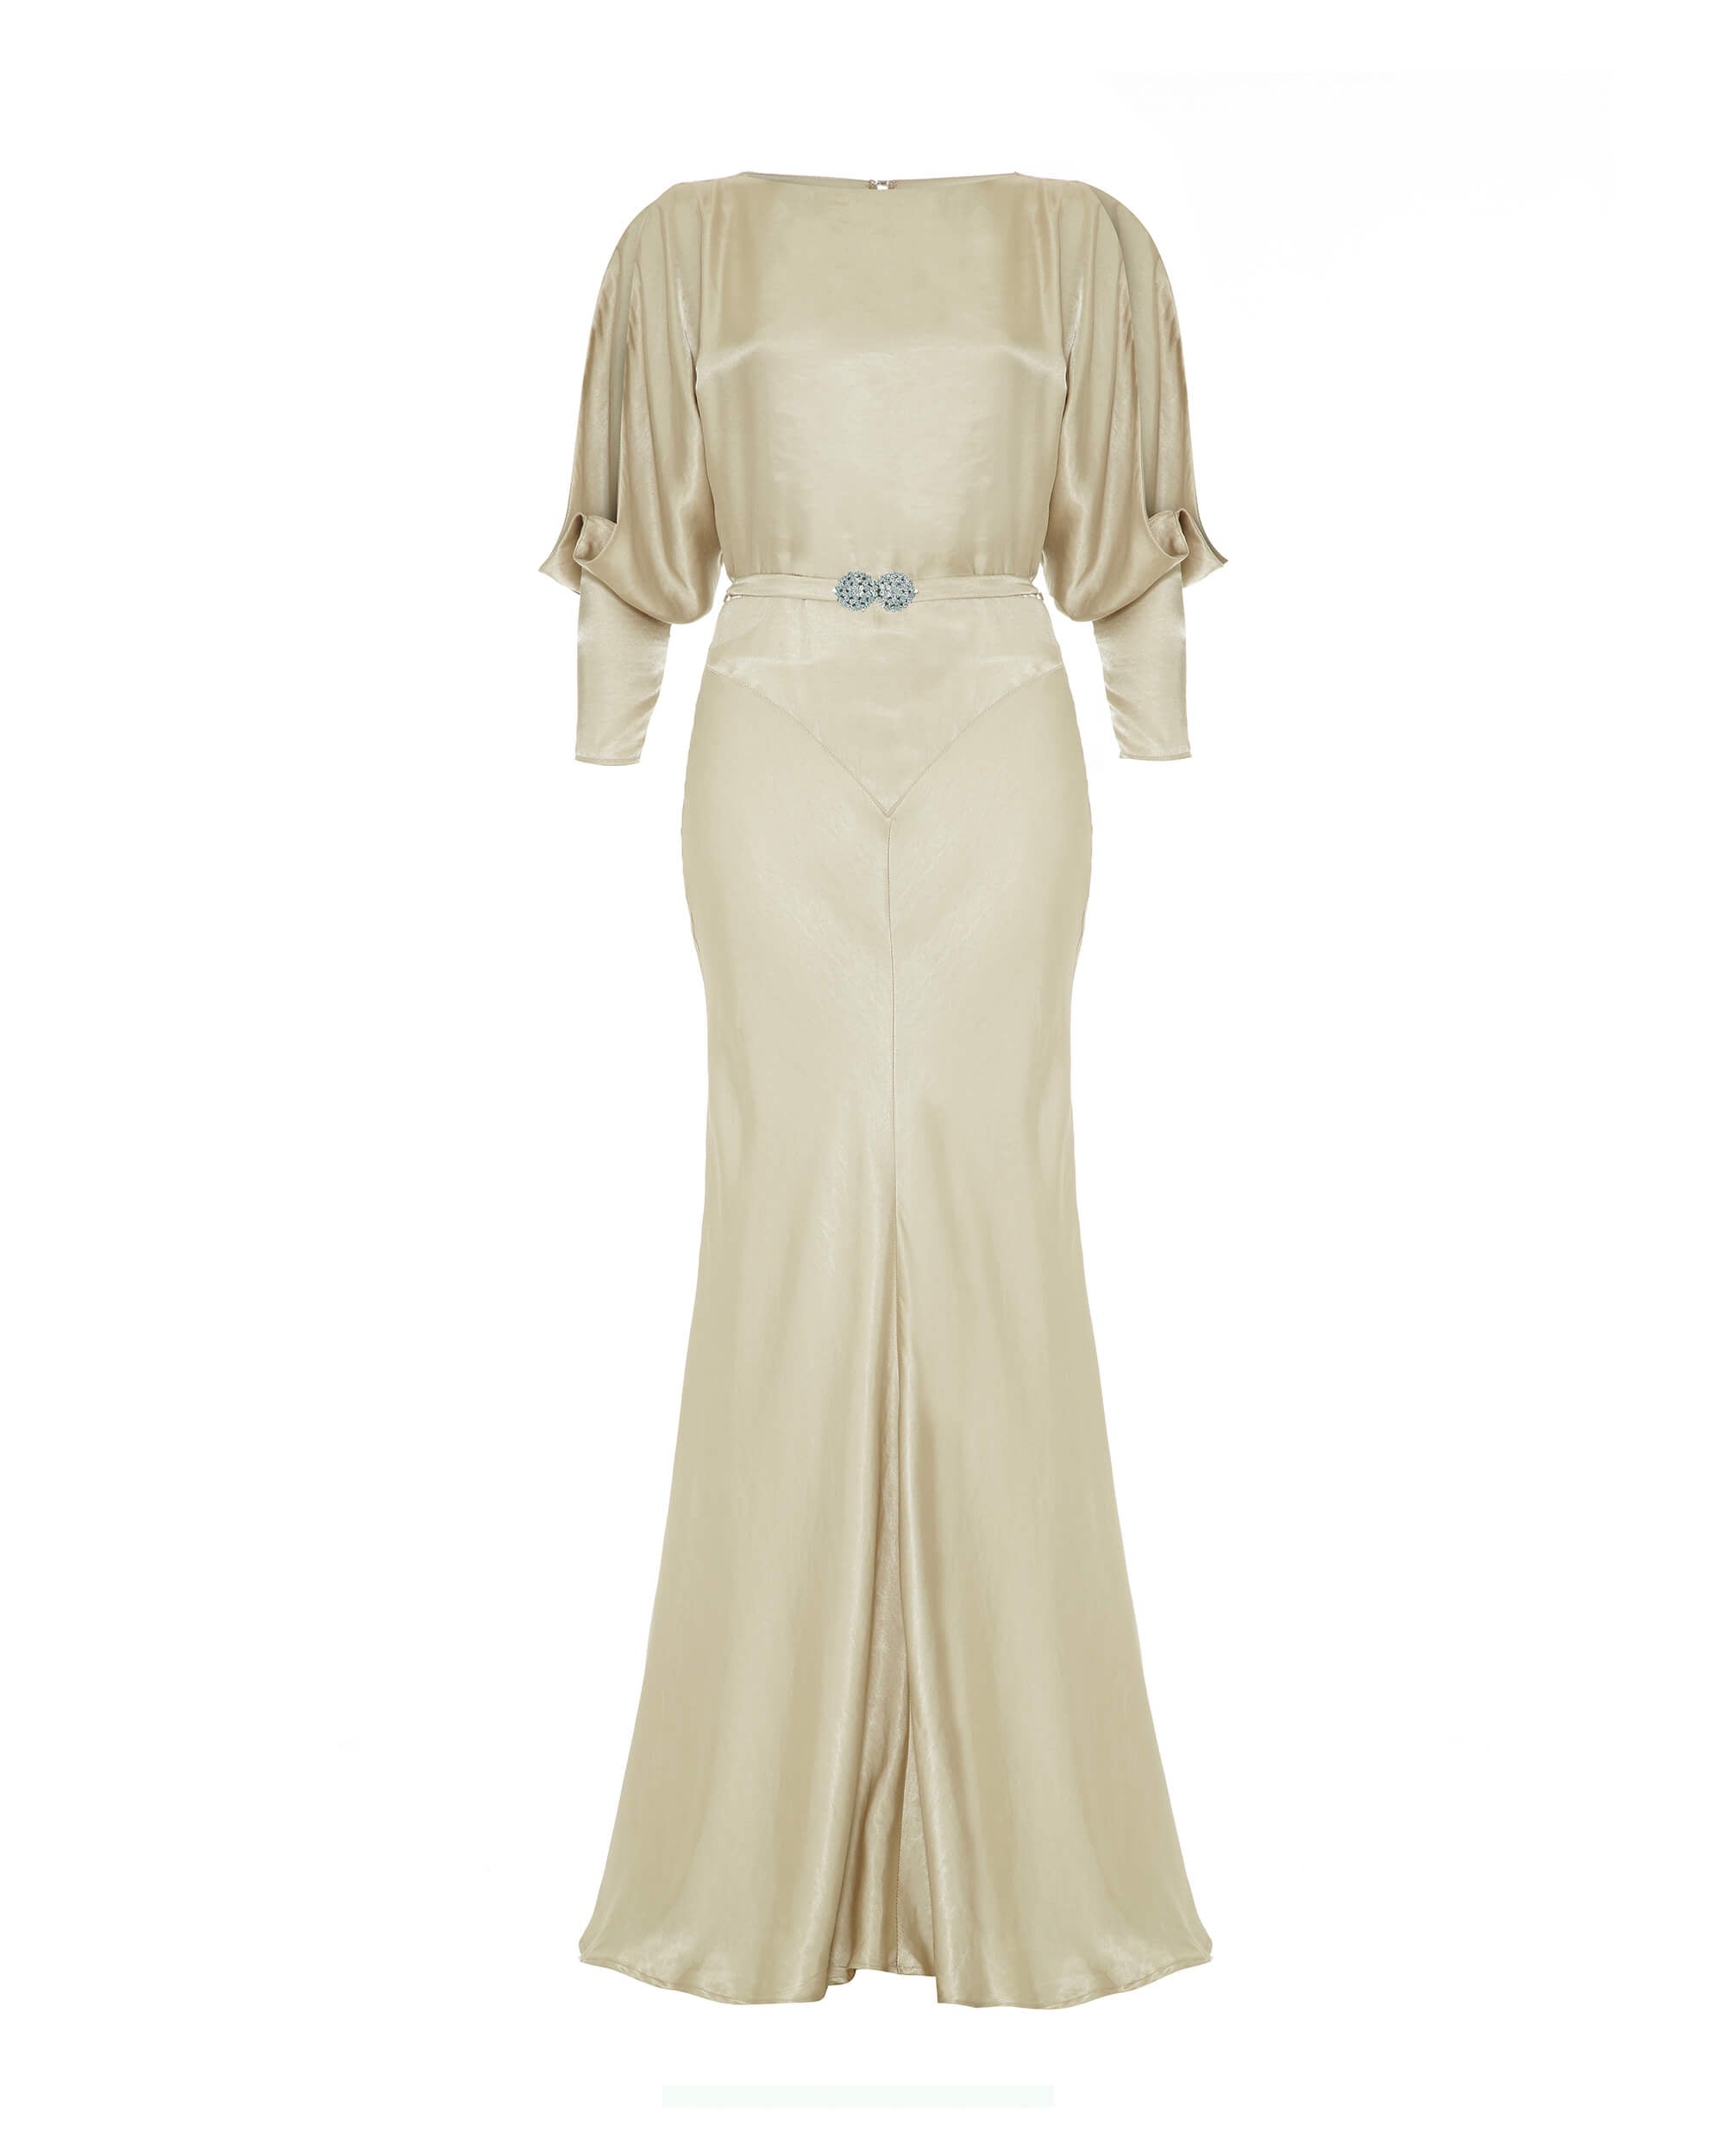 Vintage Sewing Pattern 1930s Evening Gown Dress Eclair Coupe Paris 30 1930  | eBay